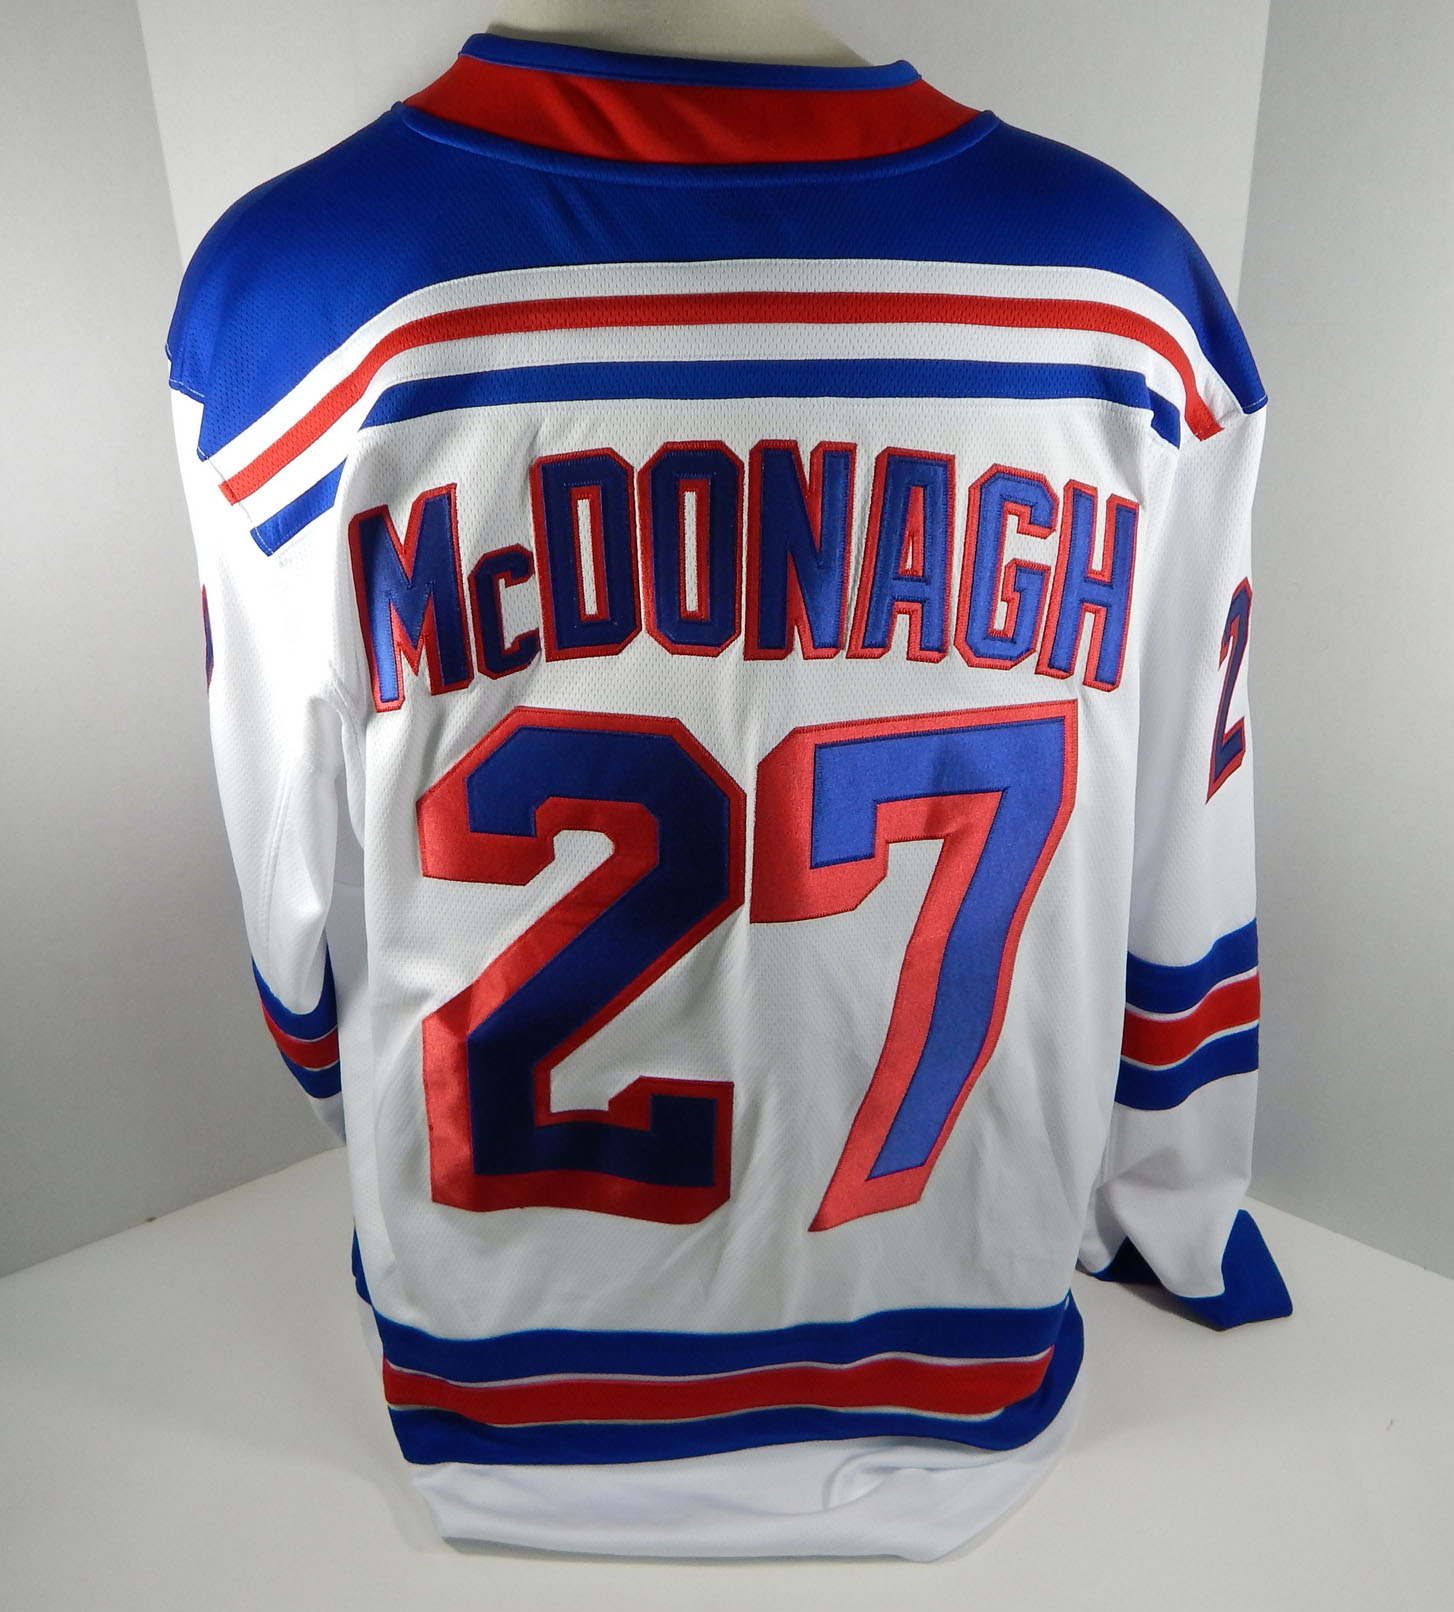 ryan mcdonagh jersey for sale